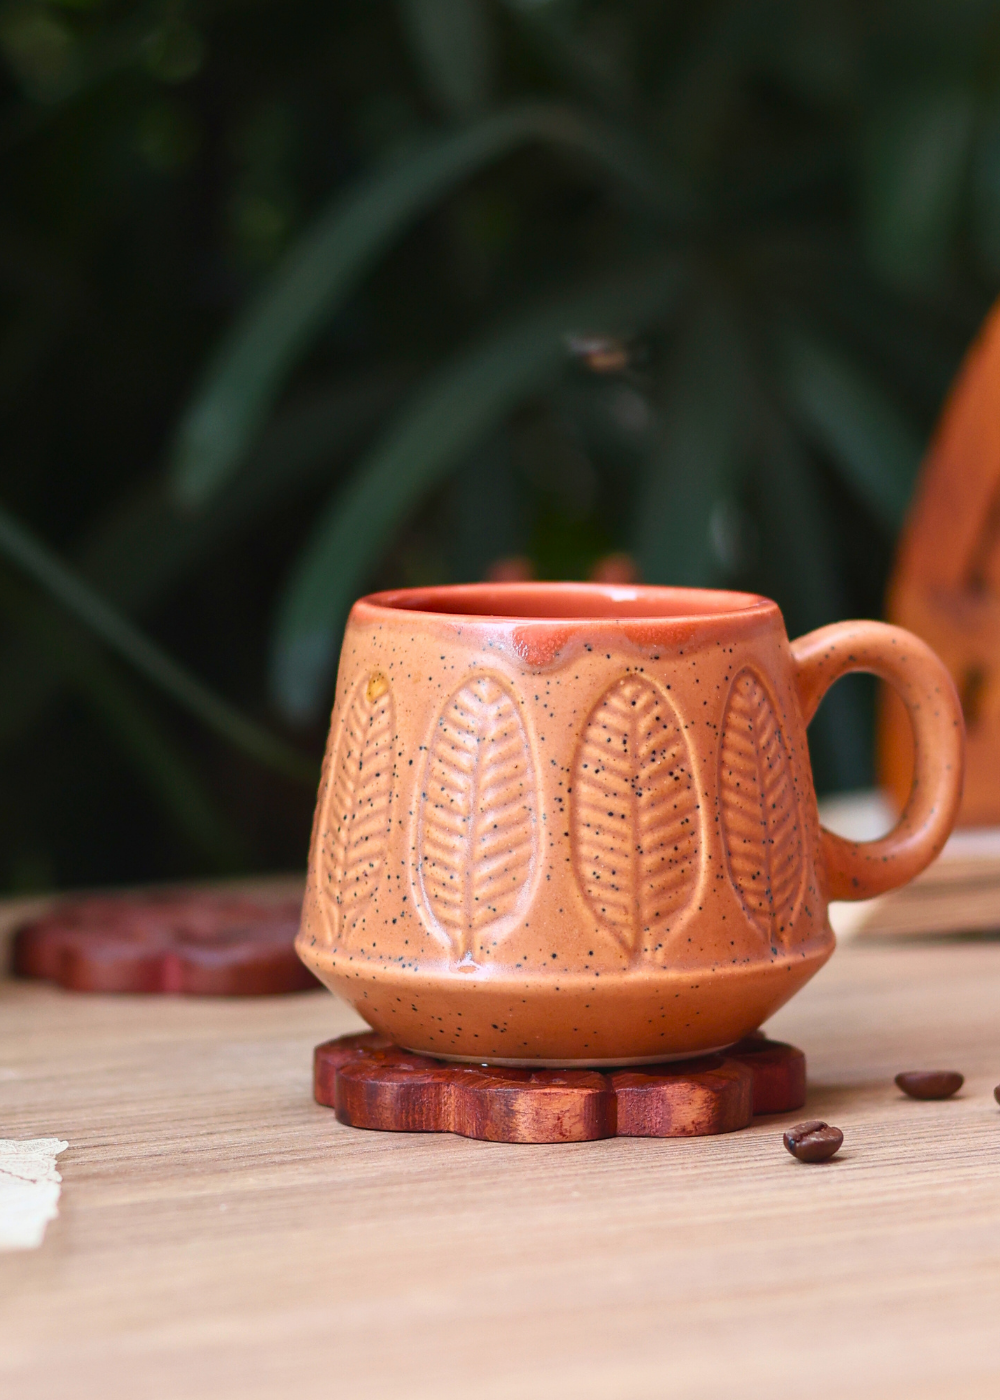 Brown serene leaf coffee mug on wooden lid